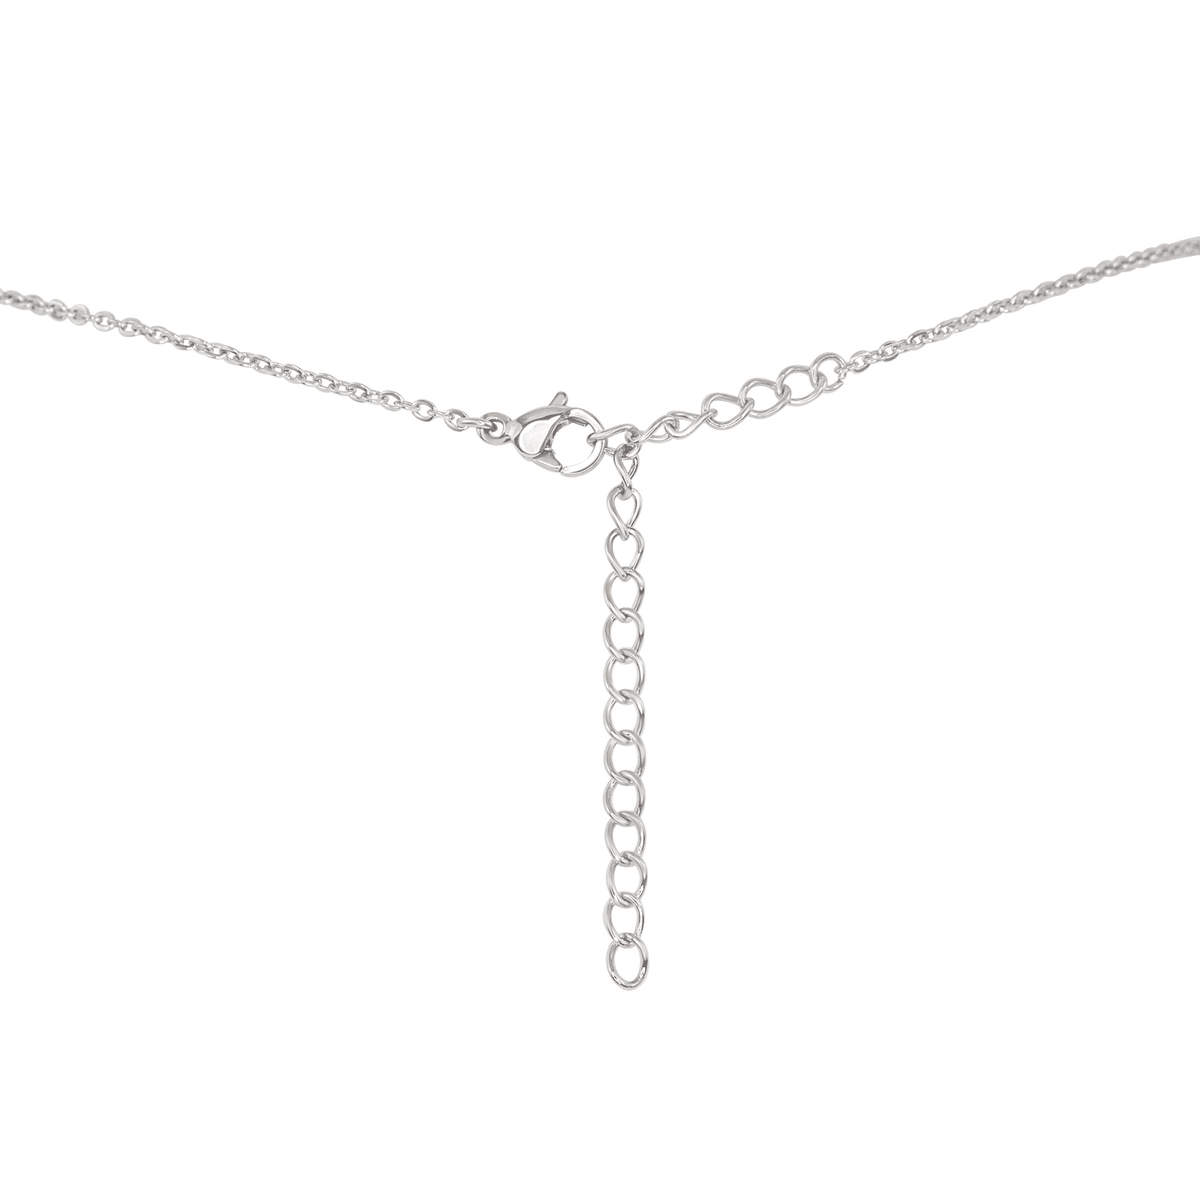 Turquoise Gemstone Chain Layered Choker Necklace - Turquoise Gemstone Chain Layered Choker Necklace - Sterling Silver - Luna Tide Handmade Crystal Jewellery